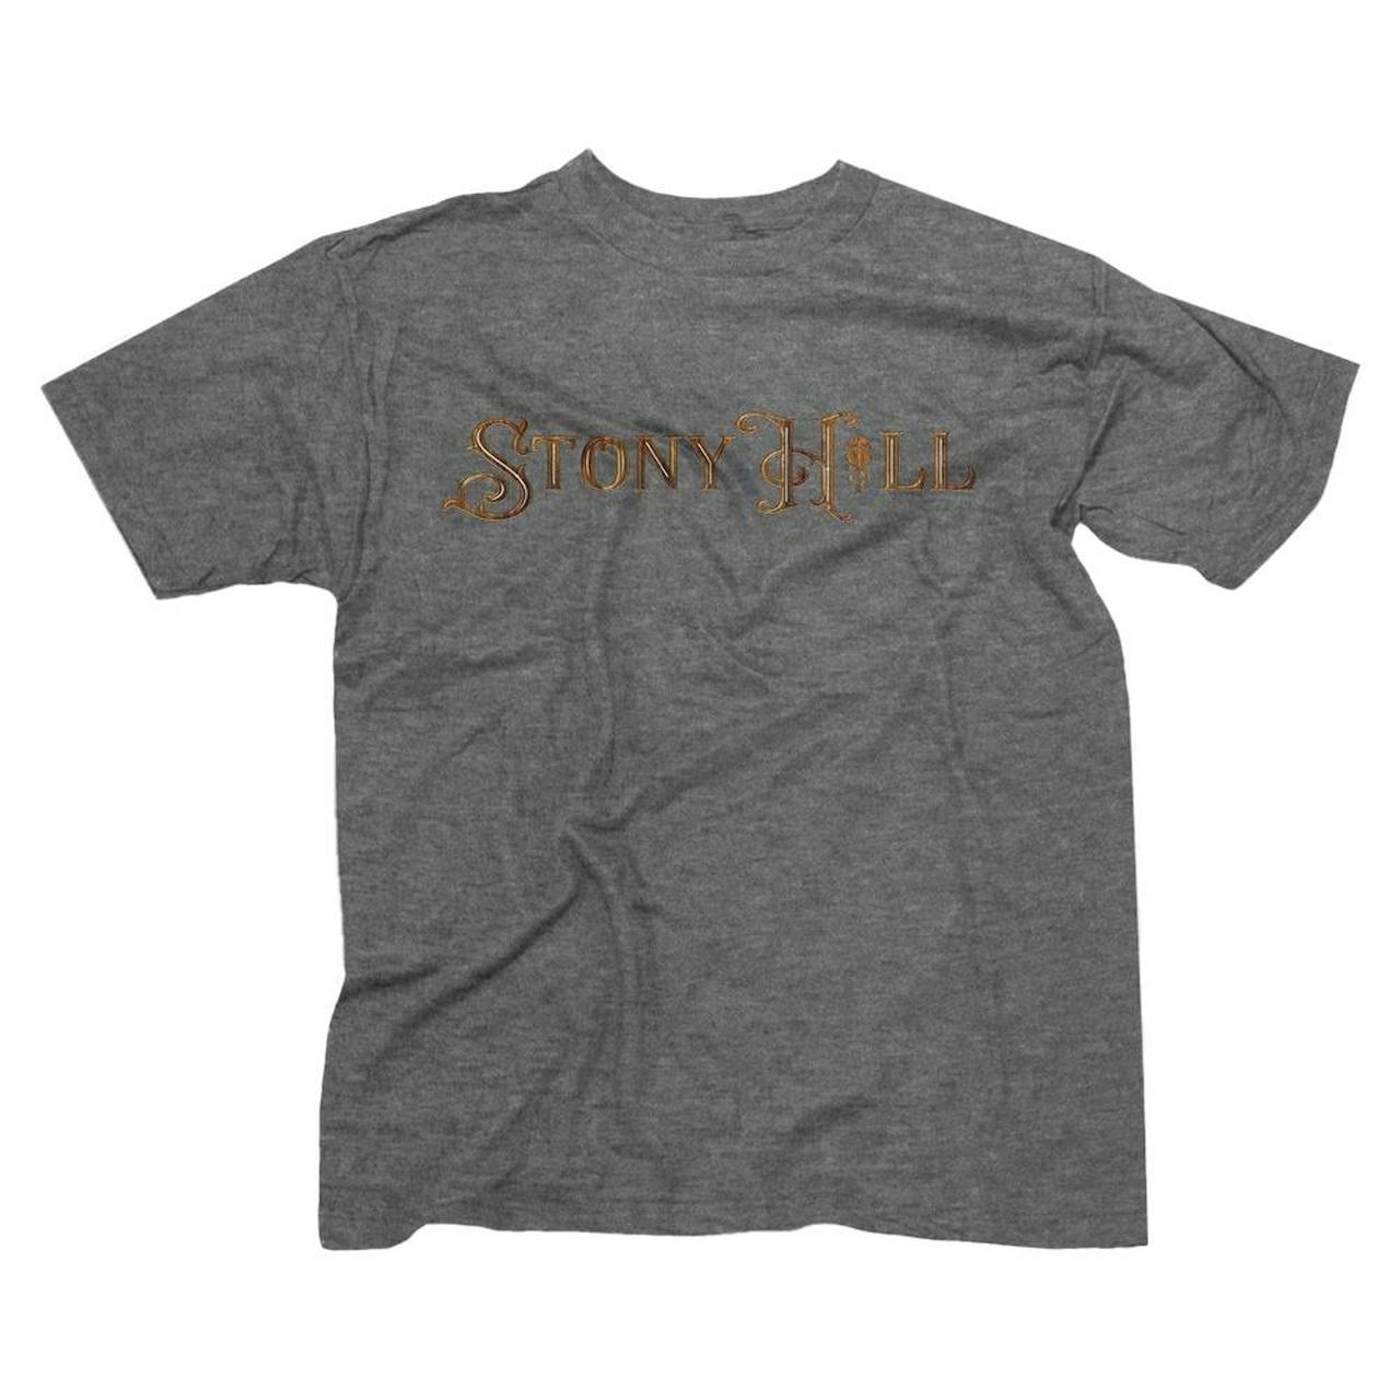 Damian Marley "Stony Hill" logo men's lite charcoal grey t-shirt